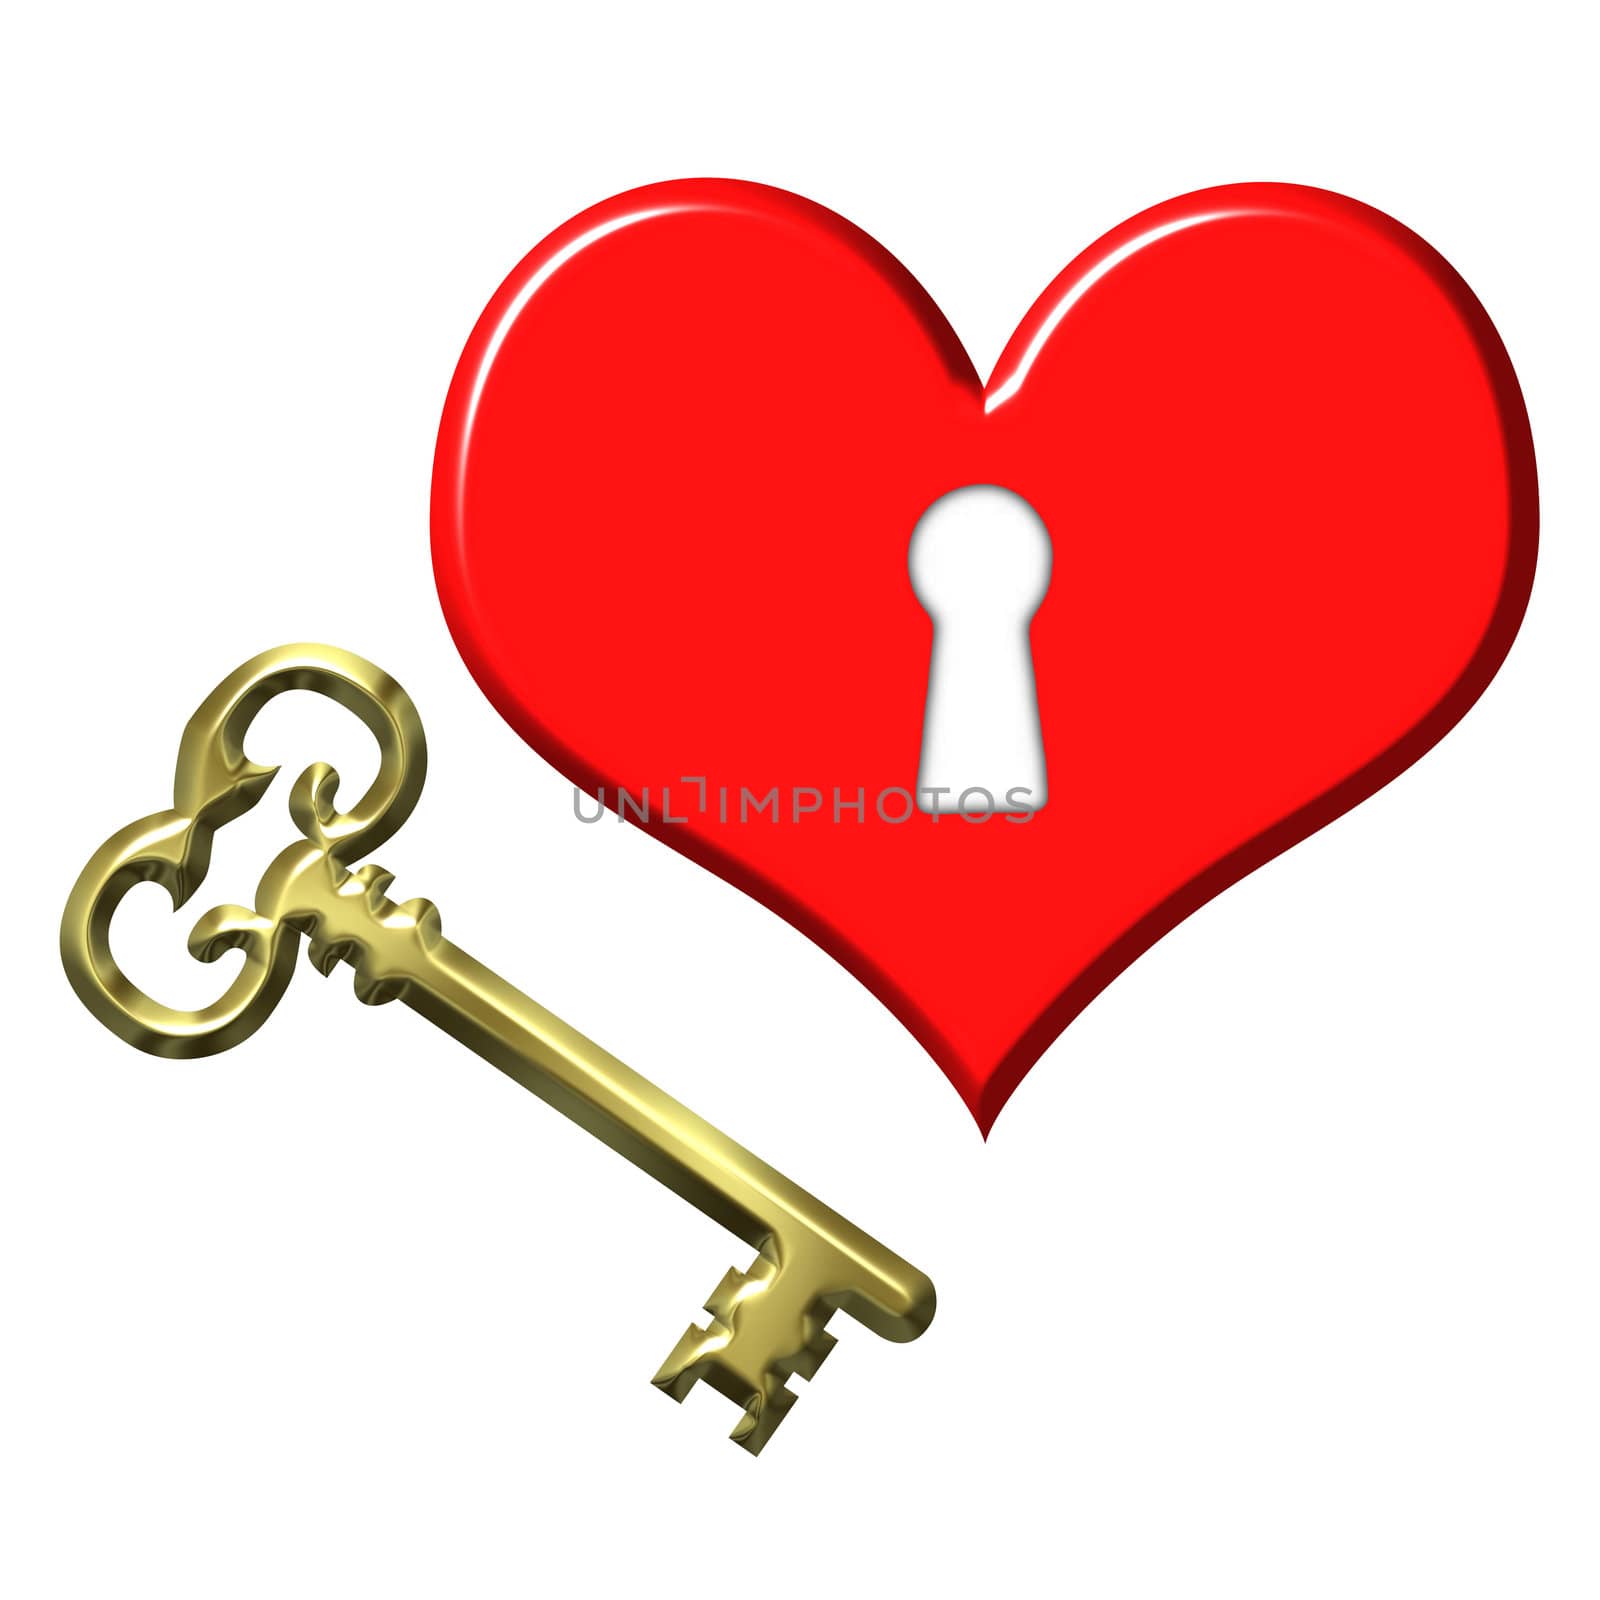 Key to my heart by Georgios